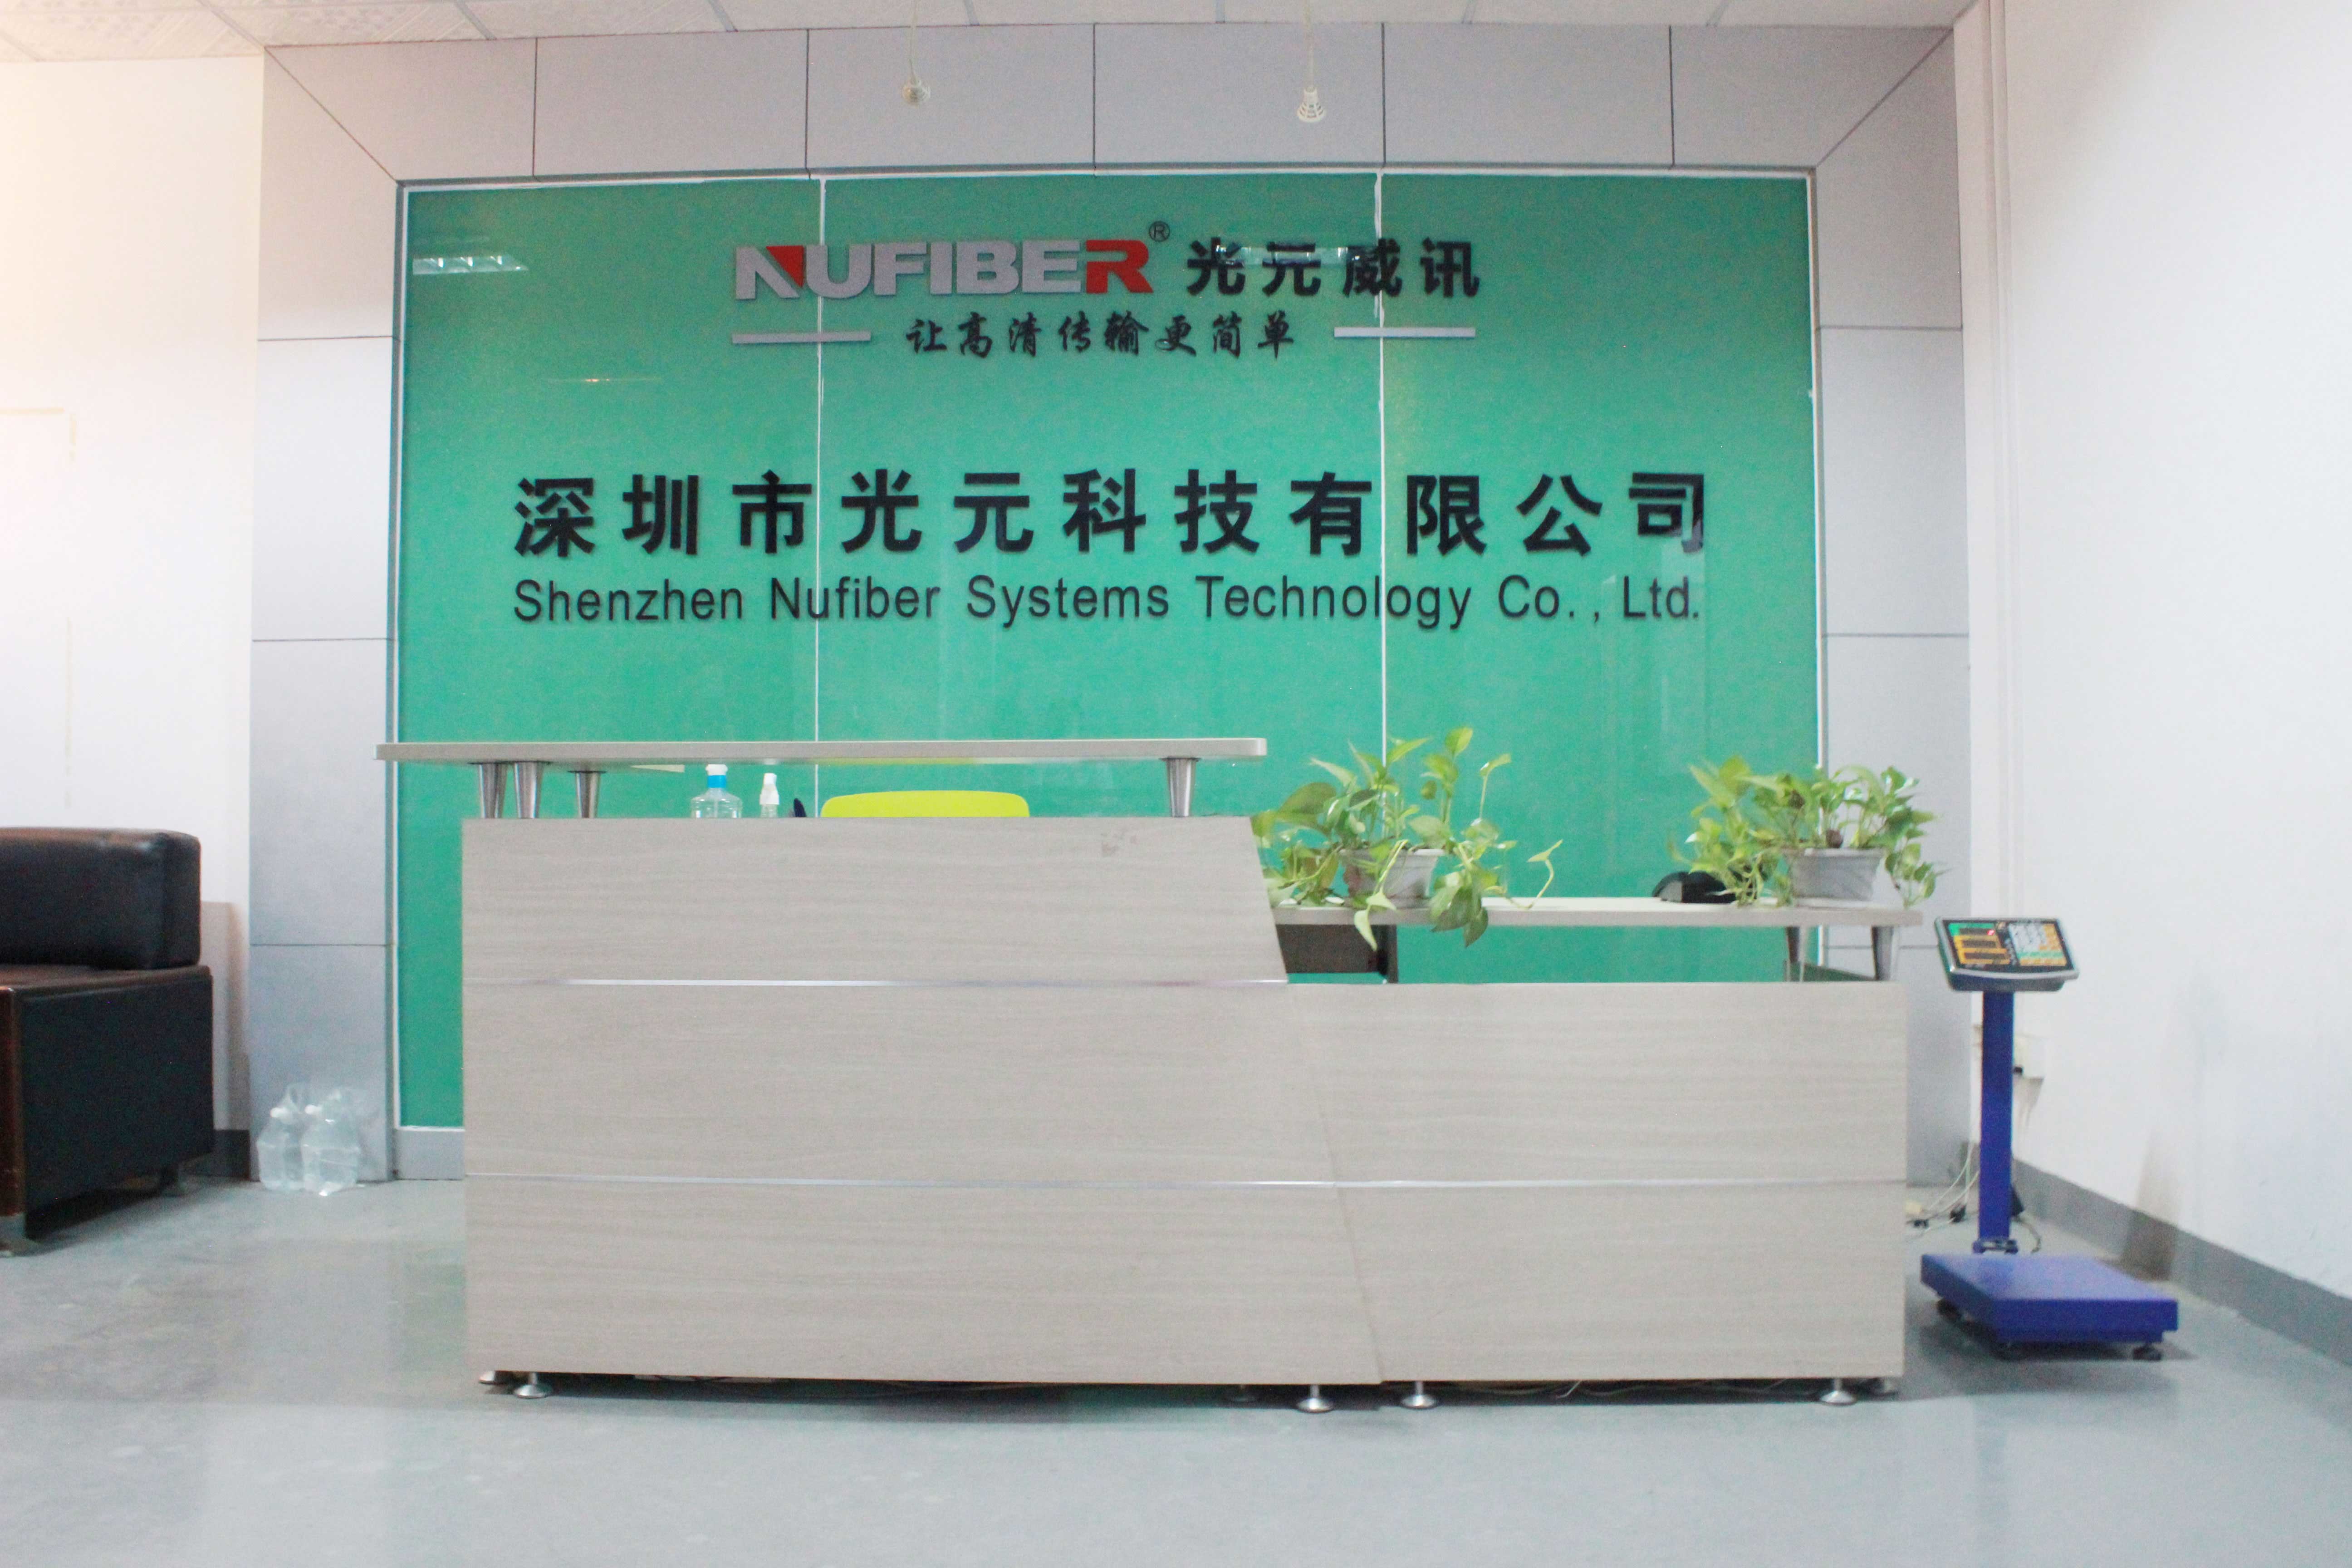 Shenzhen Nufiber Systems Technology Co., Ltd.